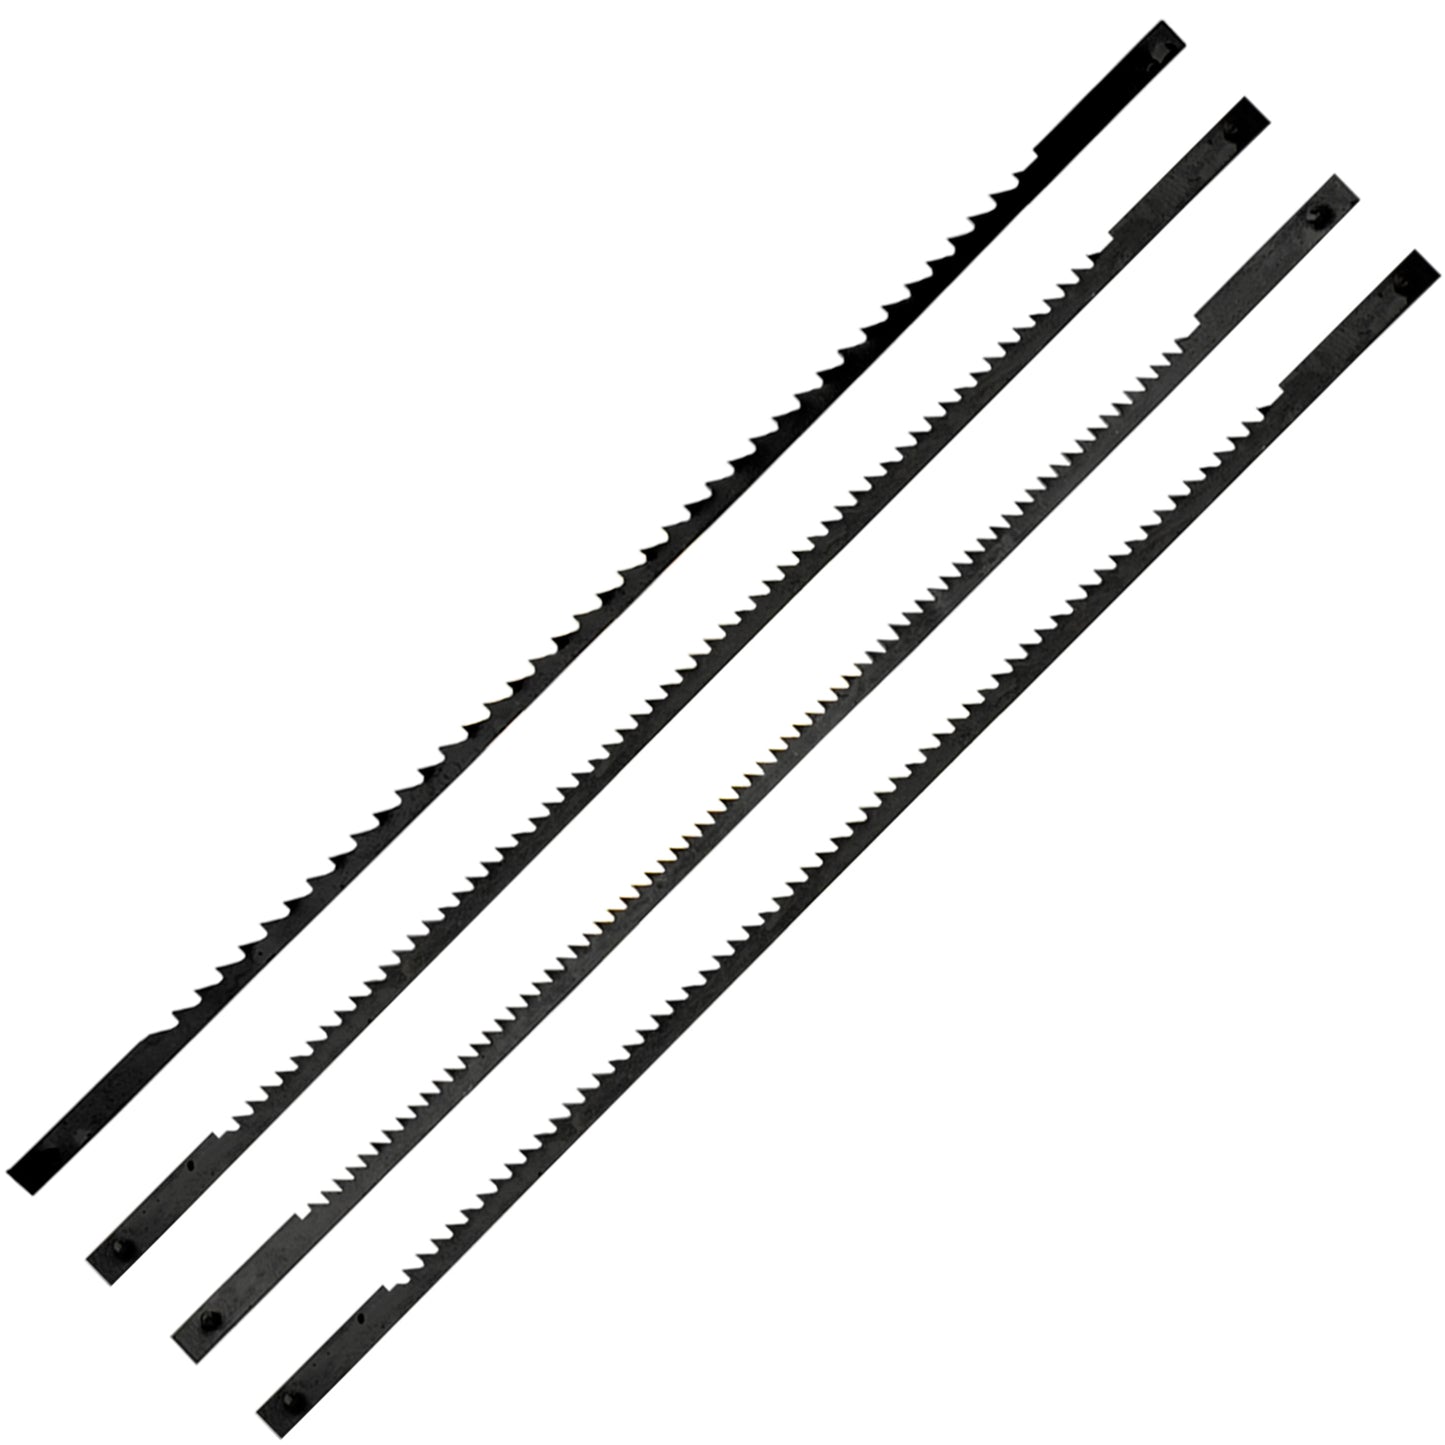 5”130mm Scroll Saw Blade Pin End Cutting Wood Metal for WEN 3921 3922 3923,Dremel,Craftsman,Delta,Ryobi Woodworking Power Tools 10TPI/ 15TPI/ 18TPI/ 24 TPI-50 Pcs